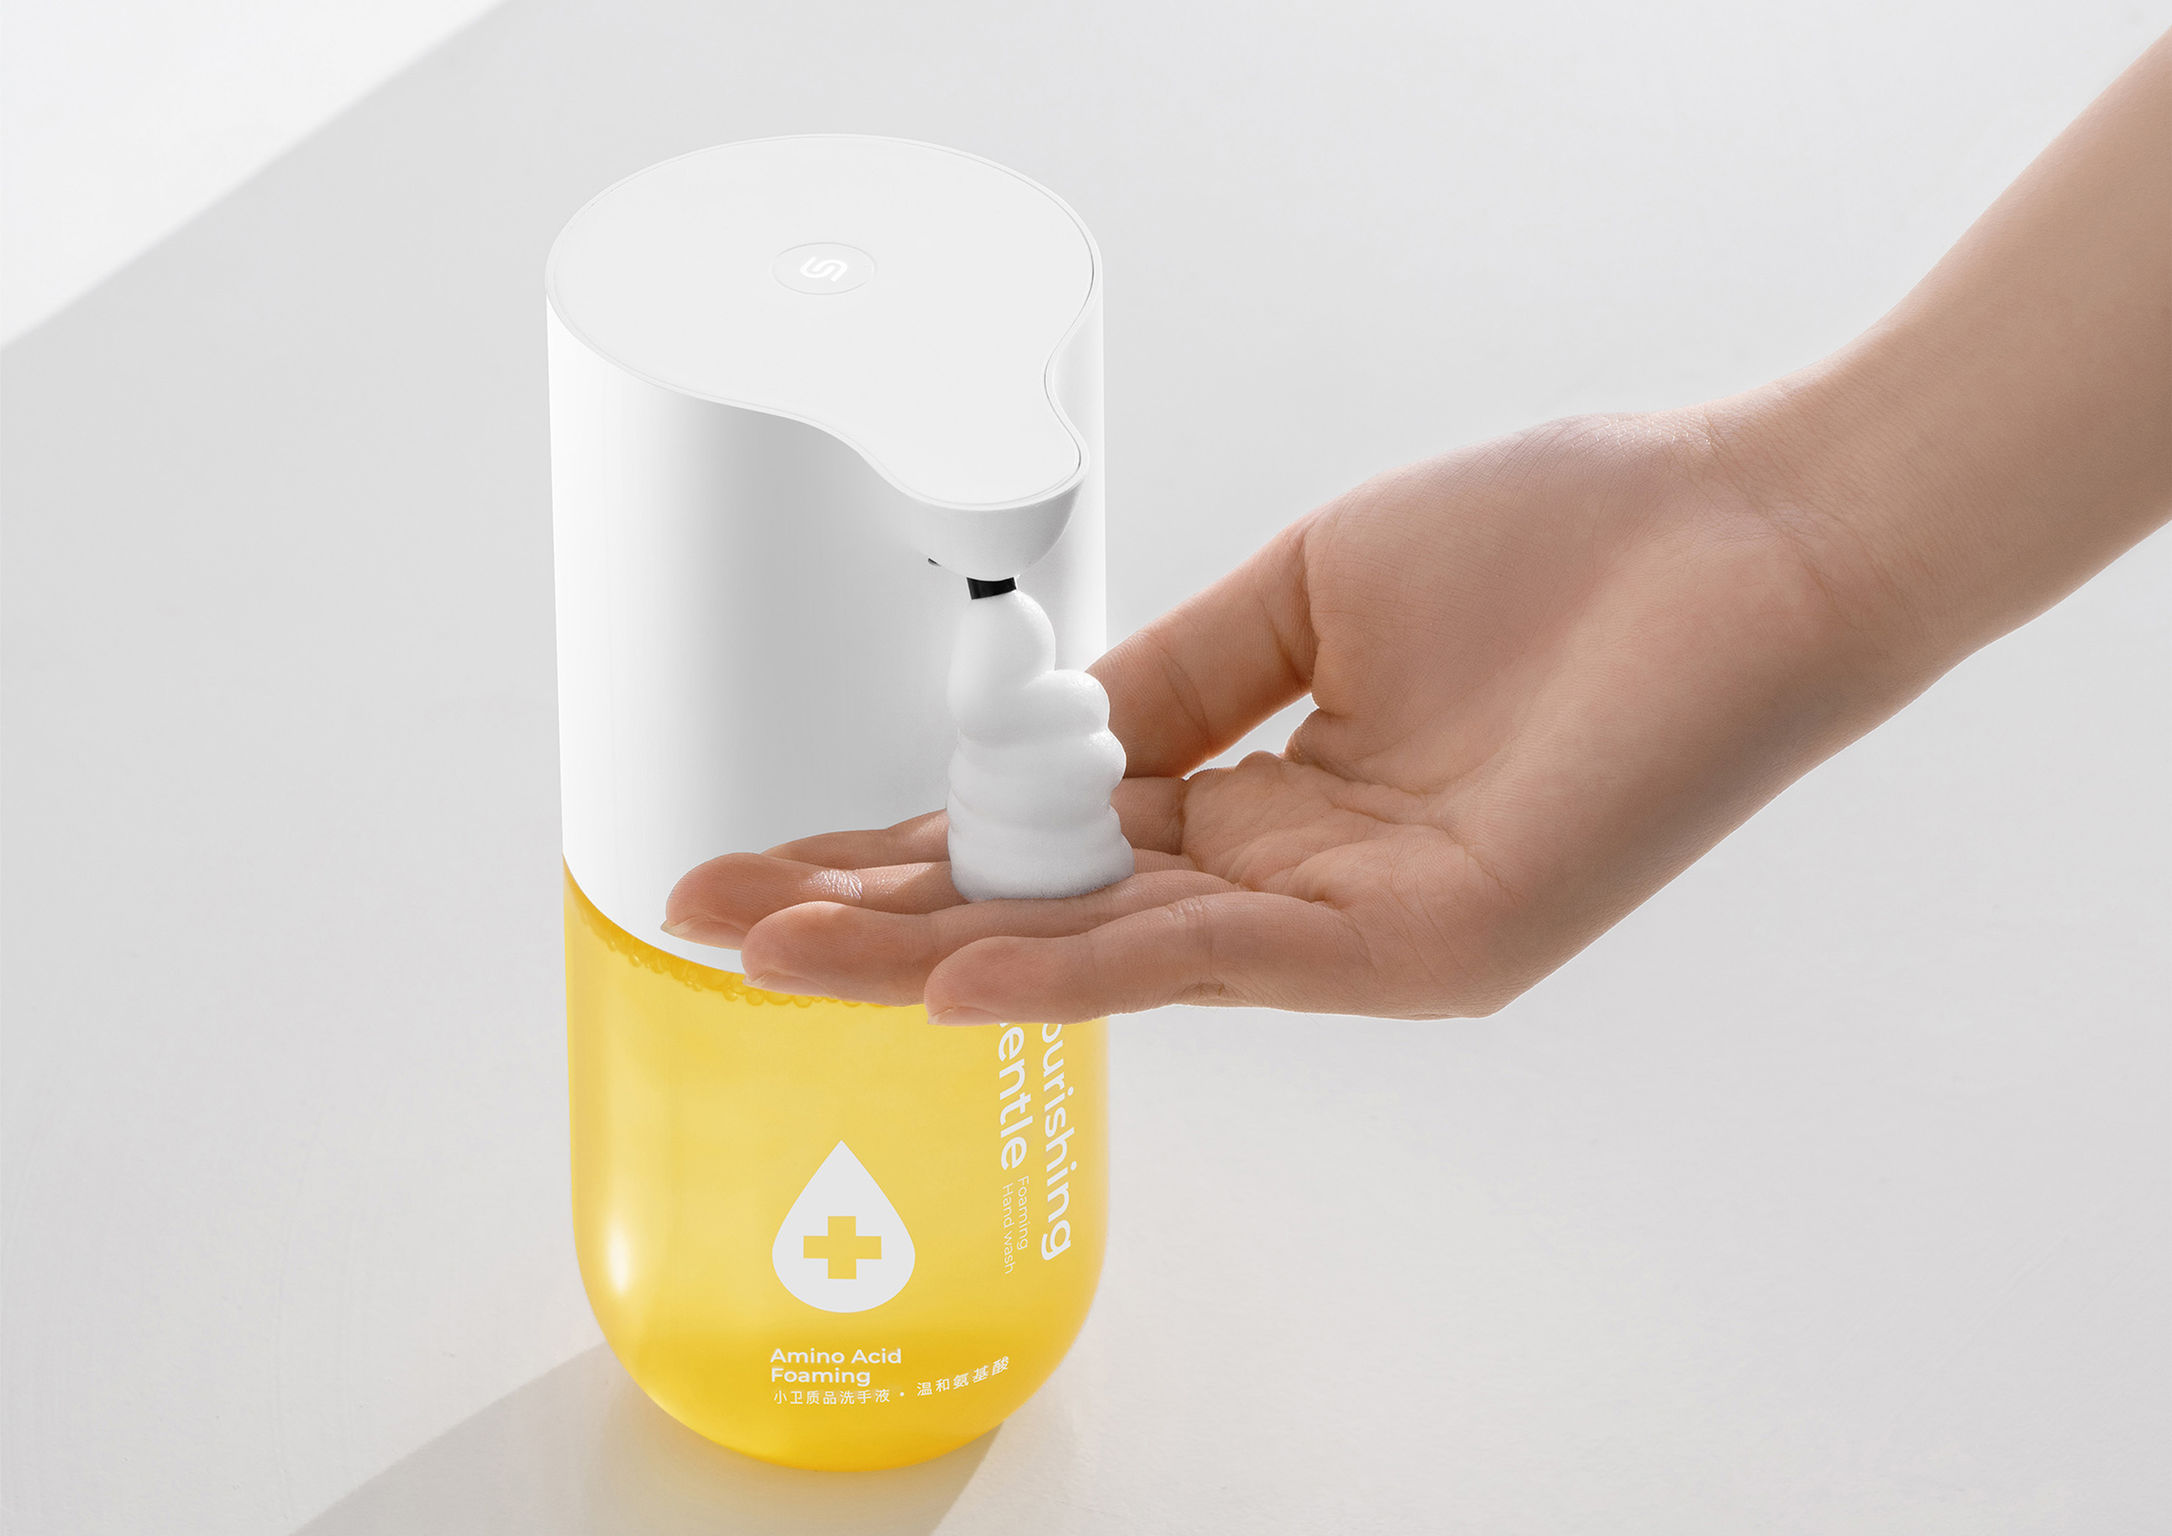 Simpleway Automatic Soap Dispenser